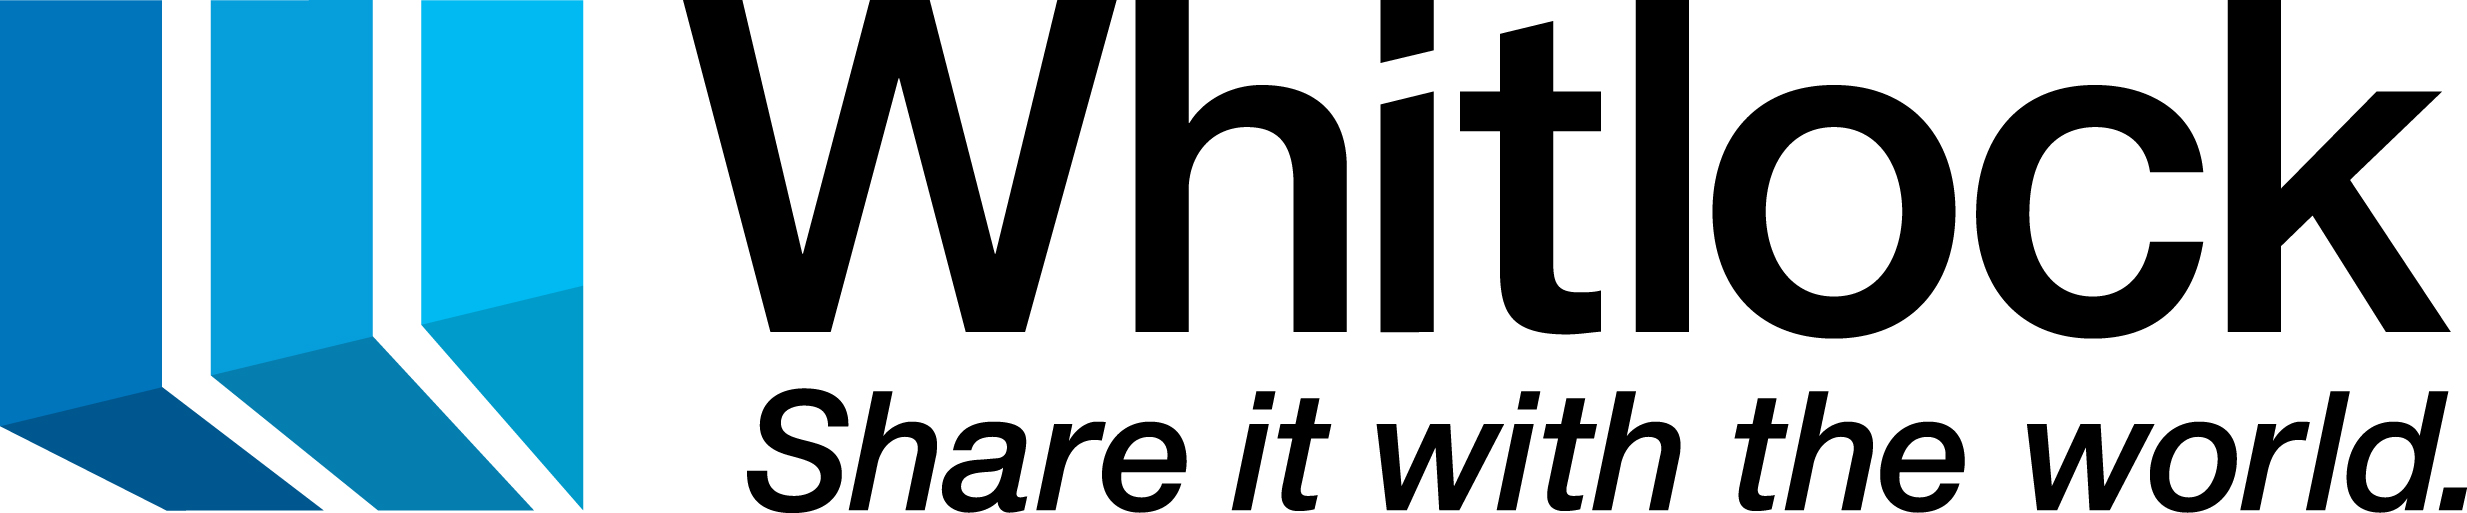 Whitlock Group